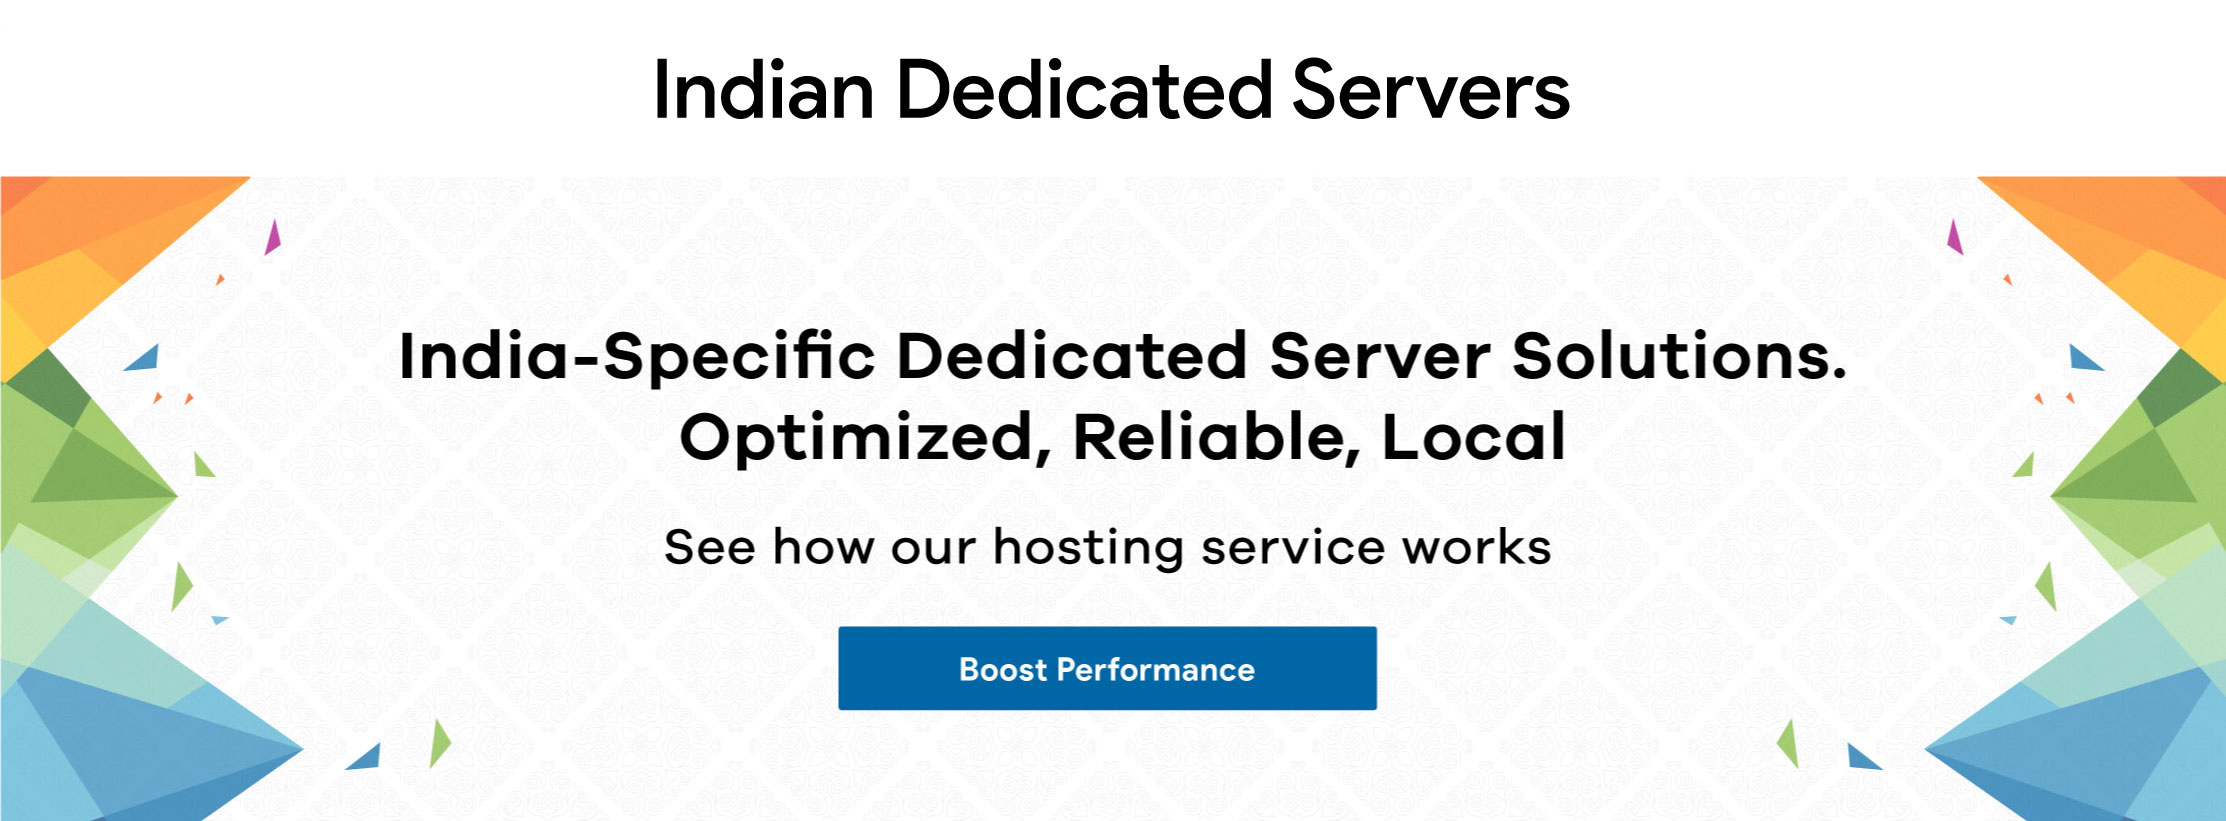 Indian-Dedicated-Servers